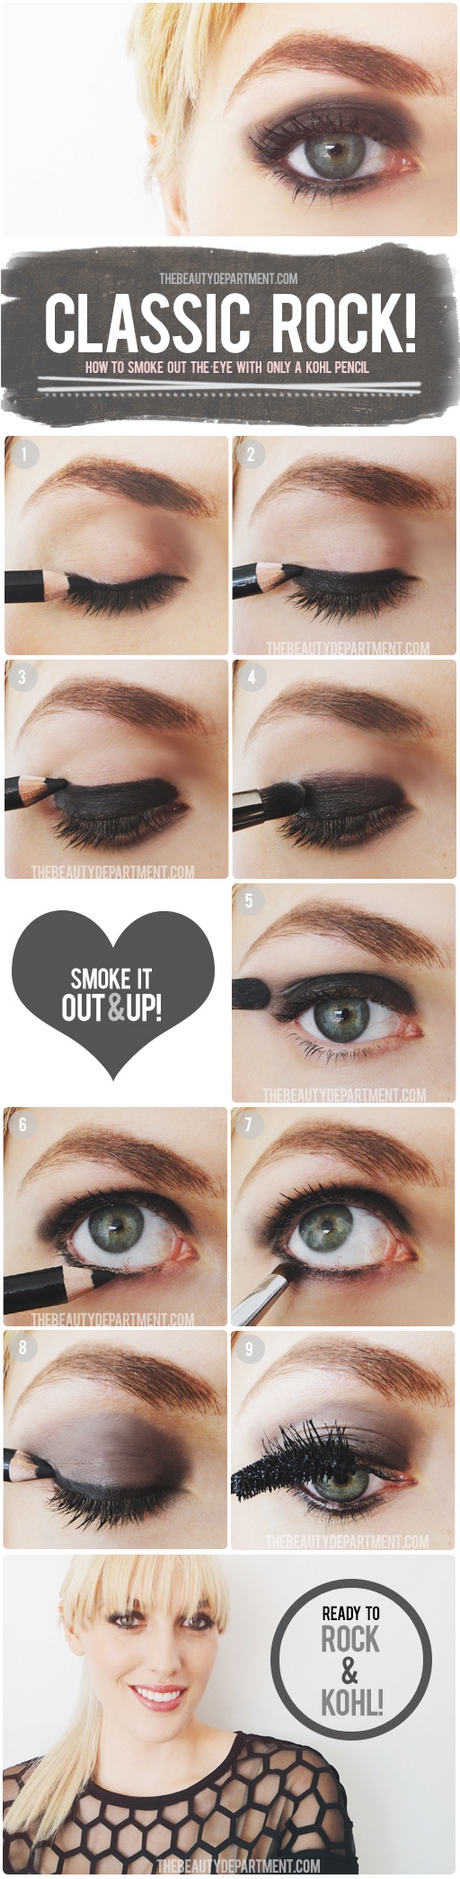 emo-makeup-tutorial-tumblr-69_15 Emo make-up tutorial tumblr